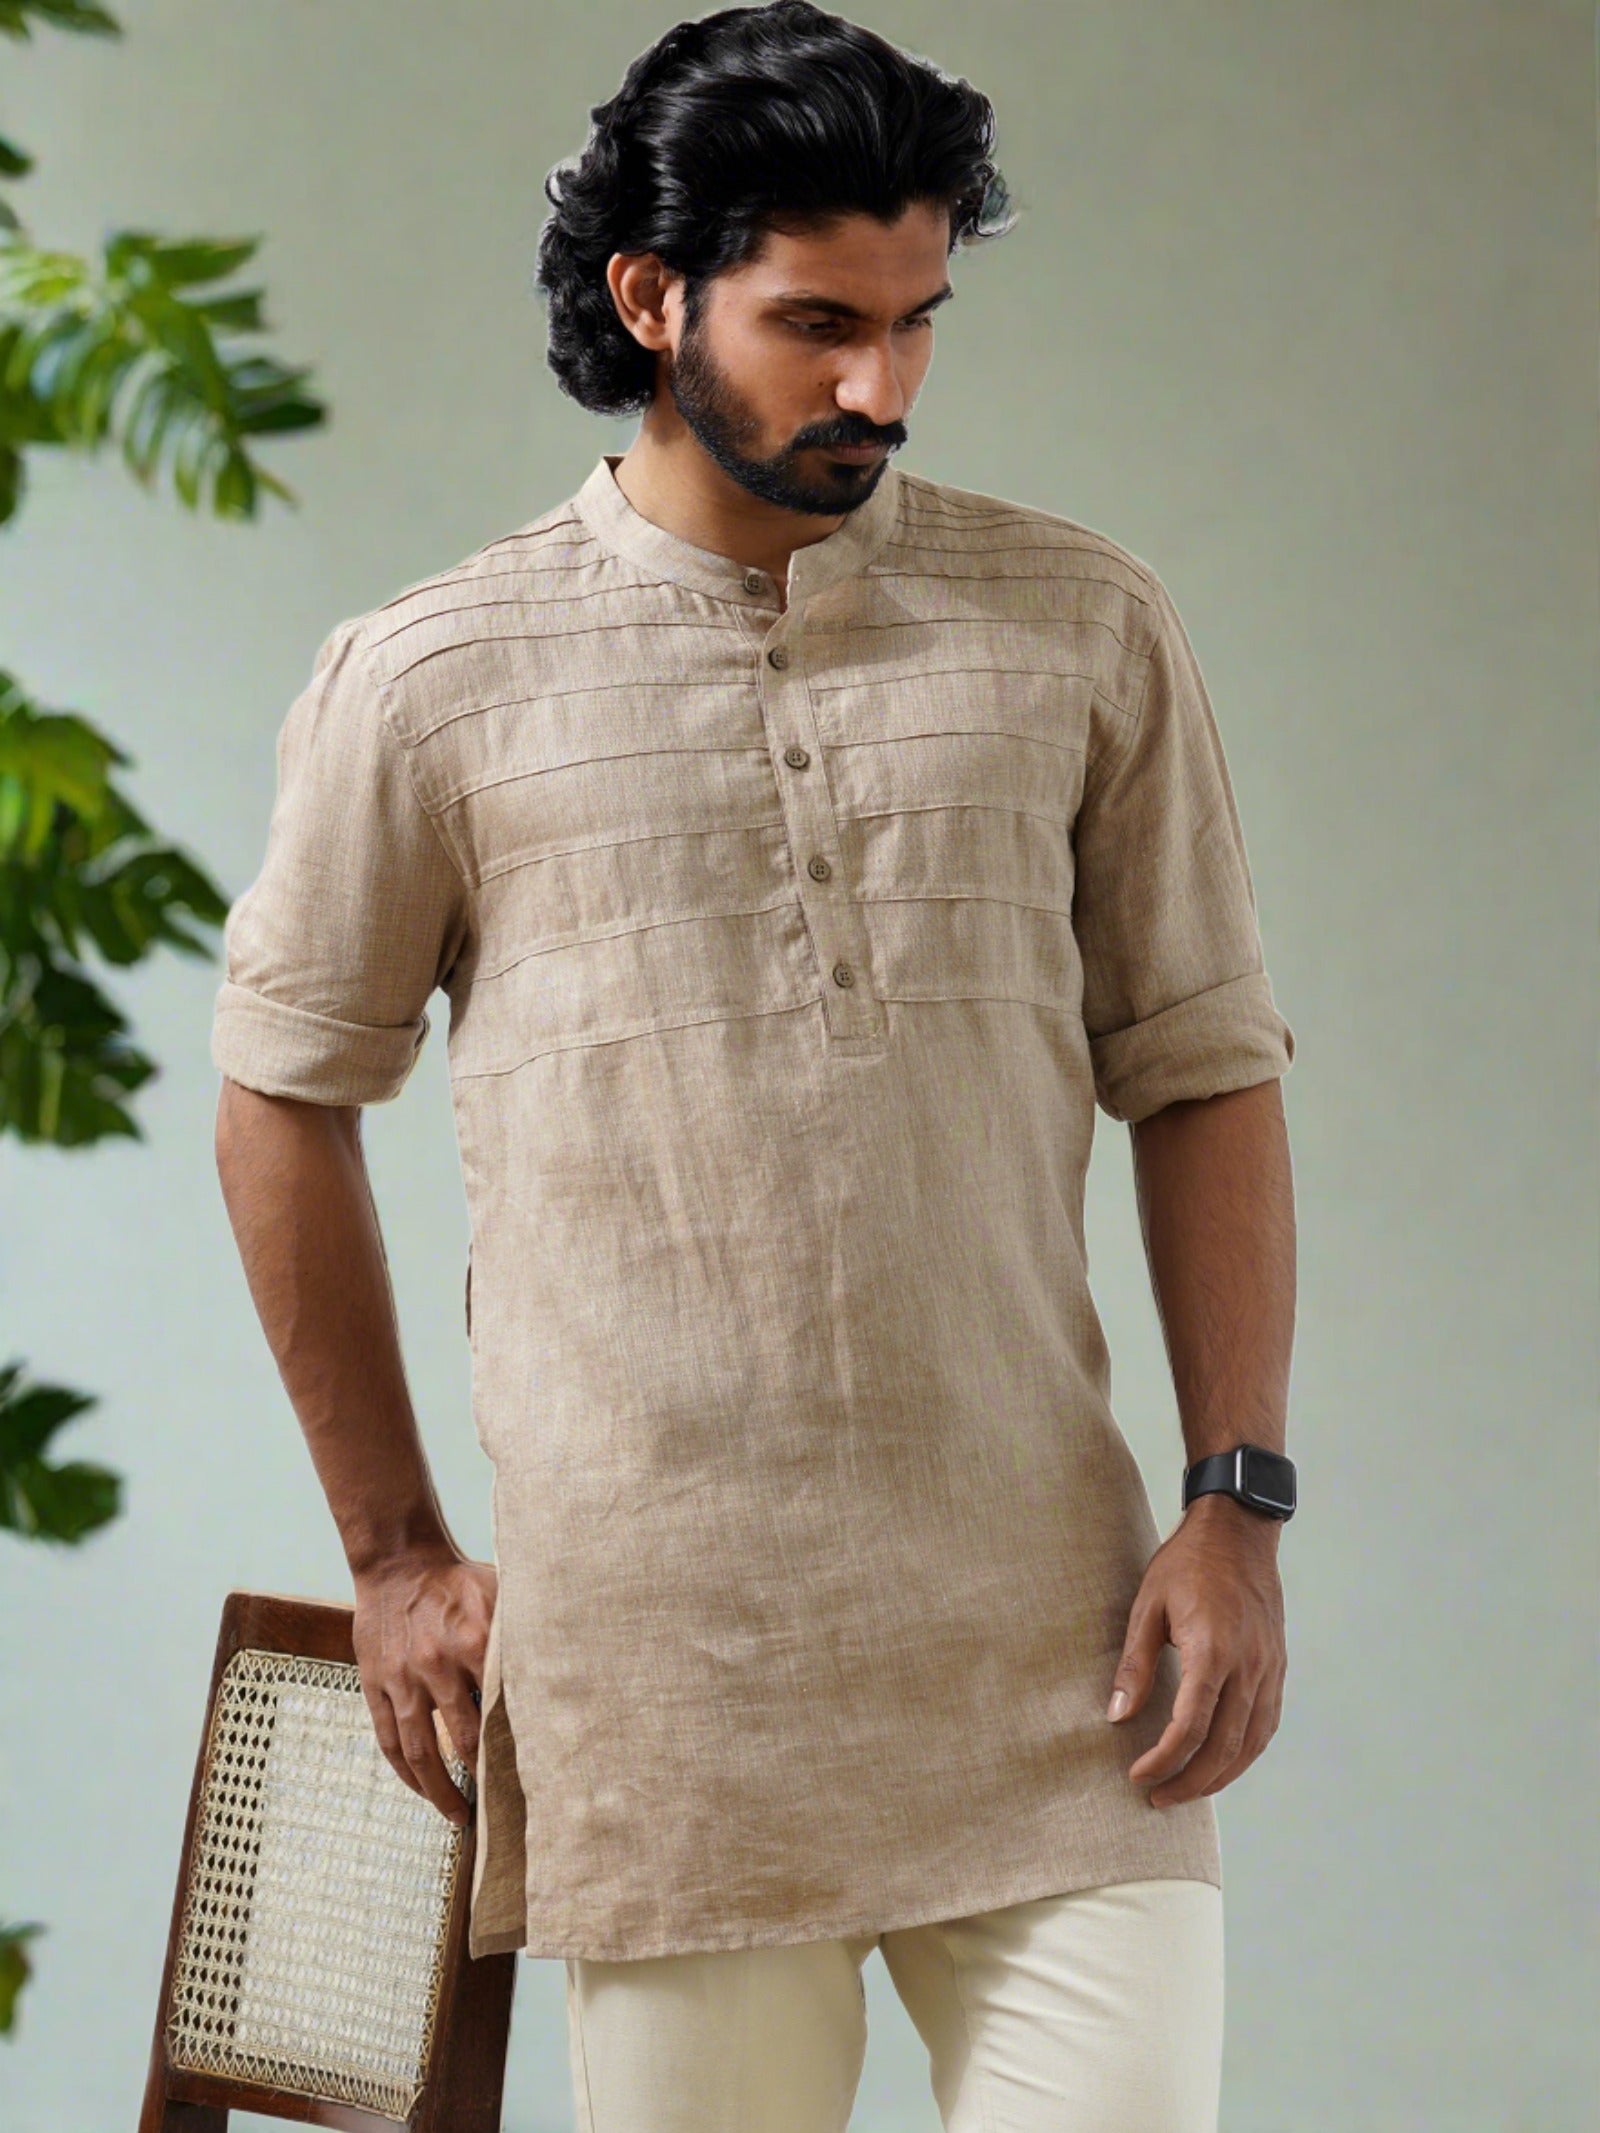 mens short kurta stitching | how to stitch gents kurta at home | lt tailors  - YouTube